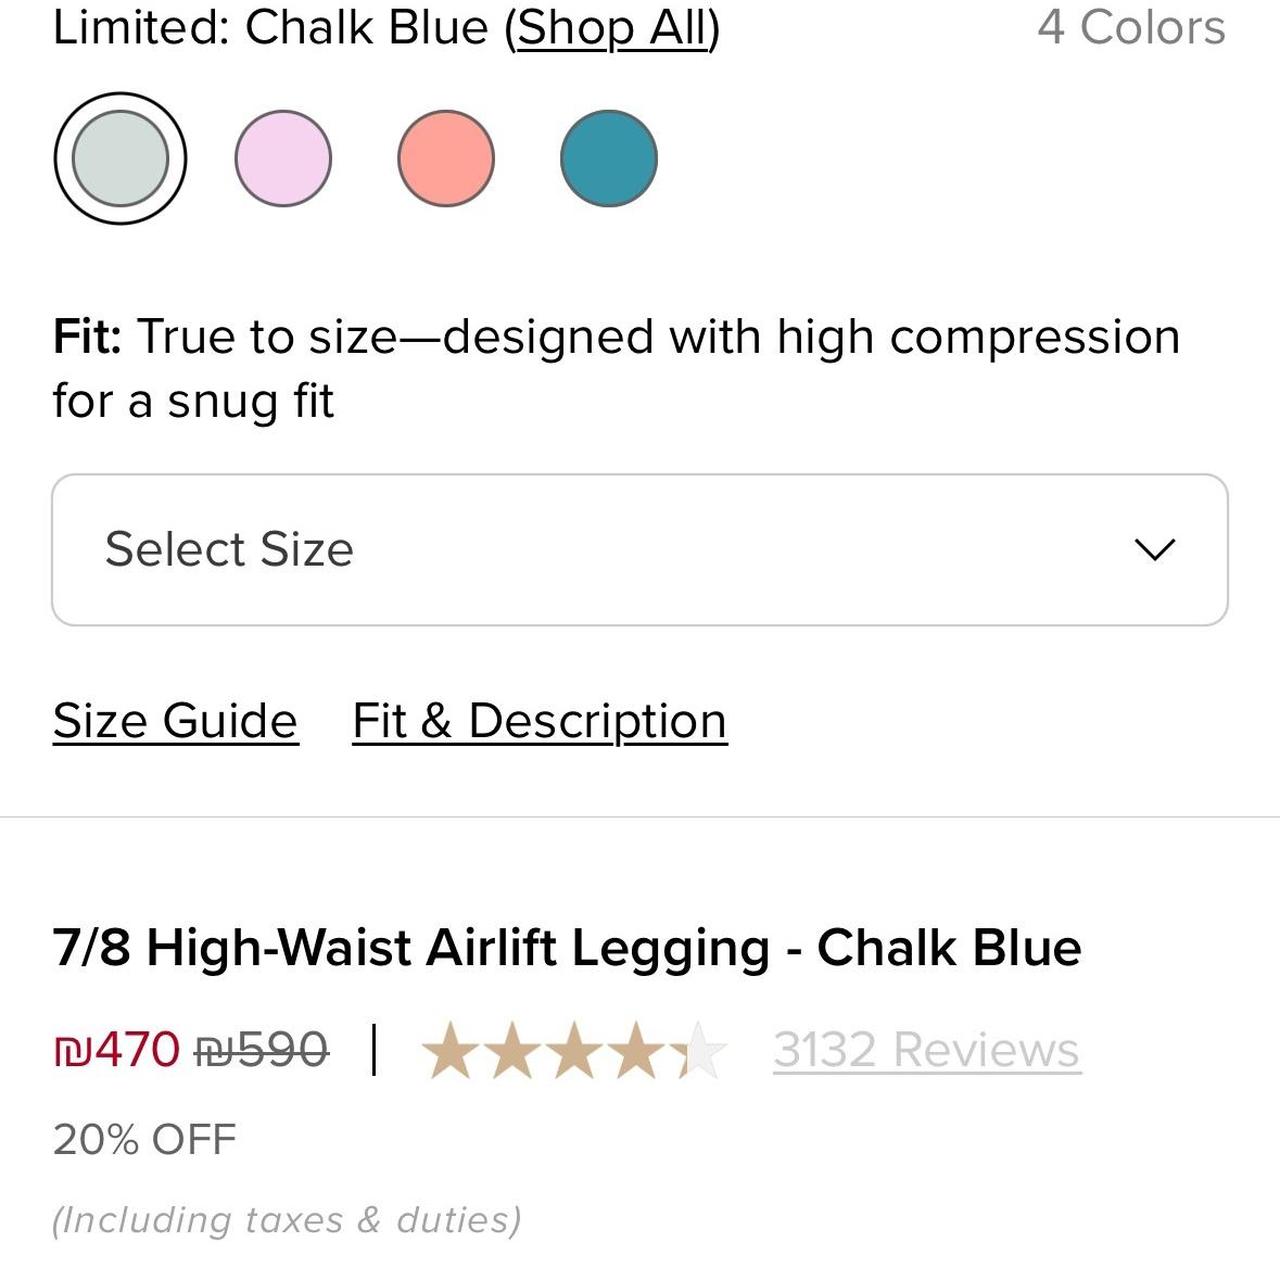 High-Waist Airlift Legging - Chalk Blue